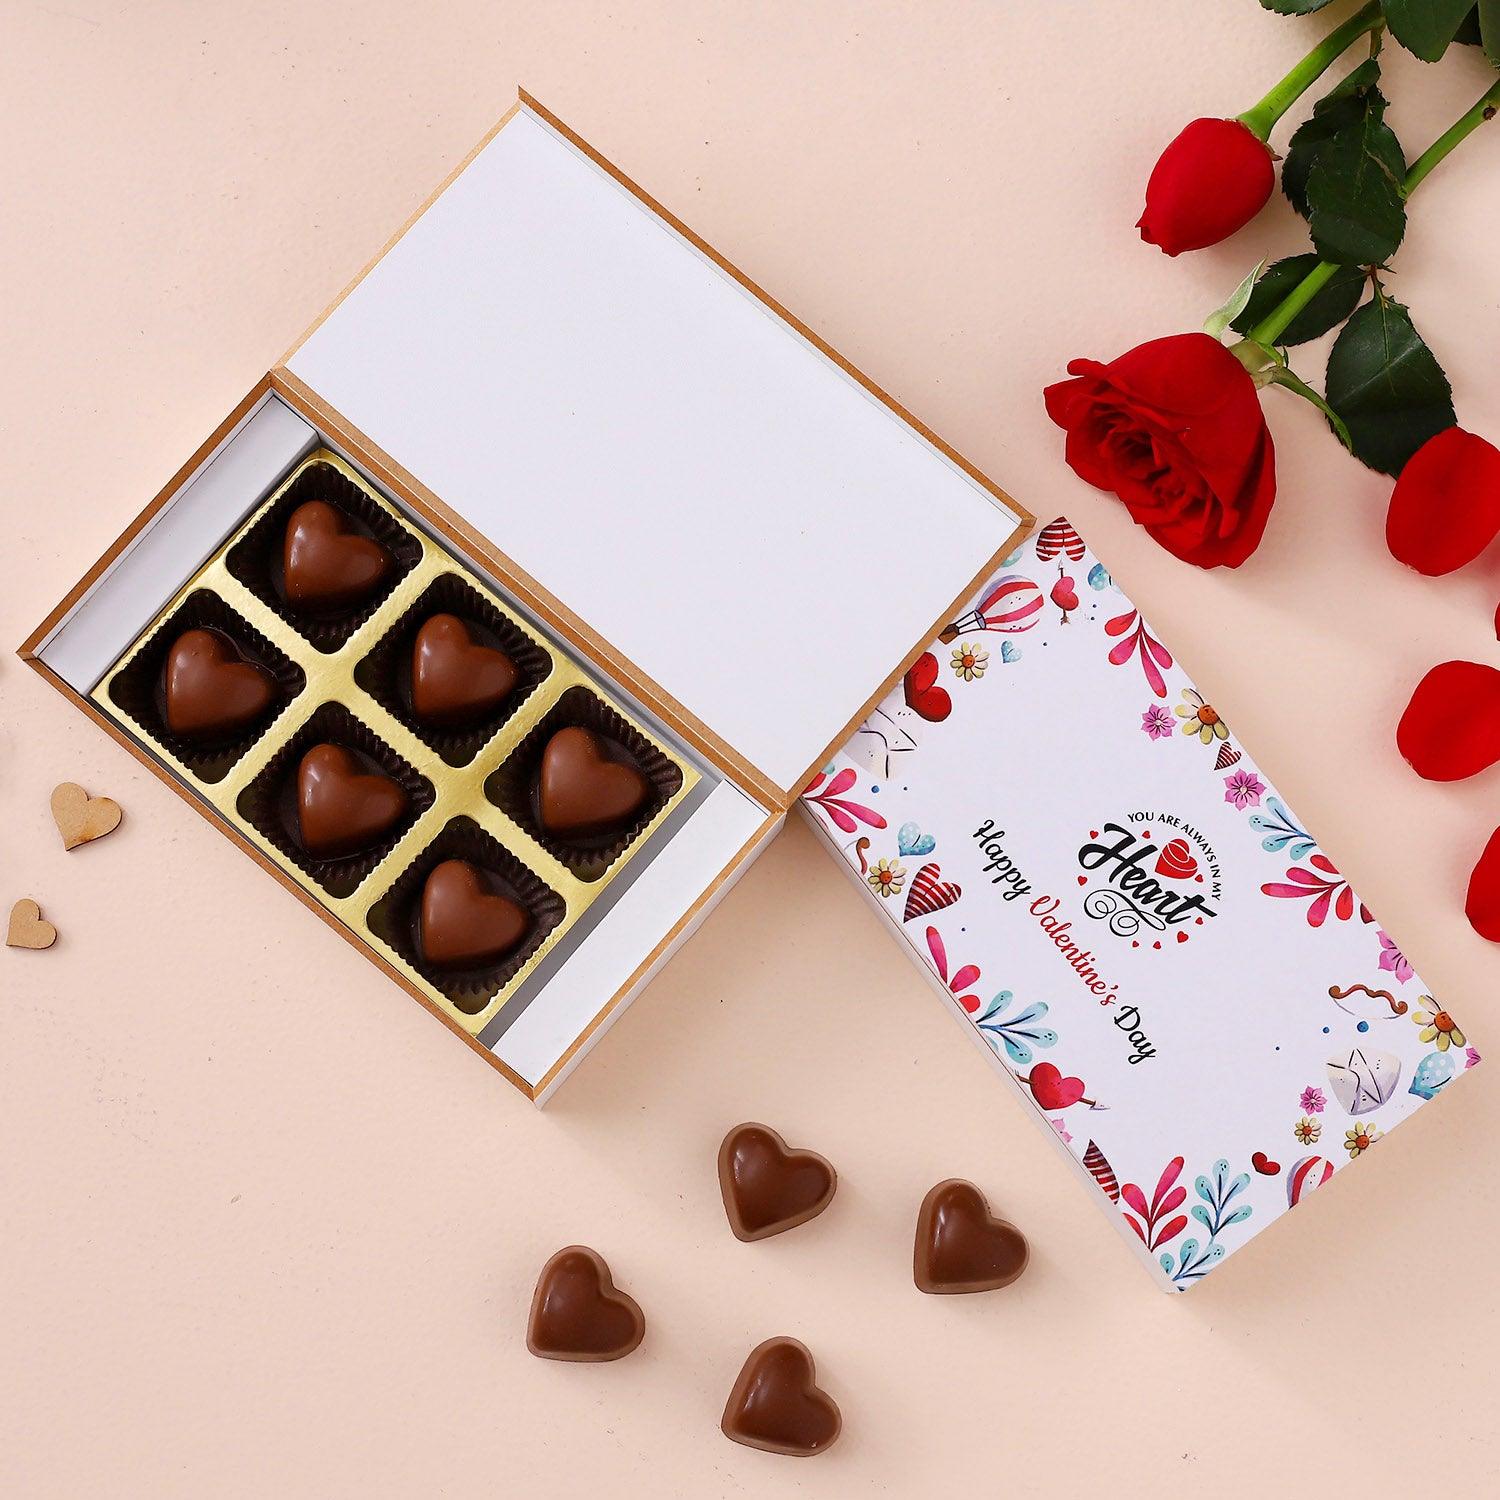 Happy Valentine's Day Lovely Heart Chocolate Box - Choco Manual ART